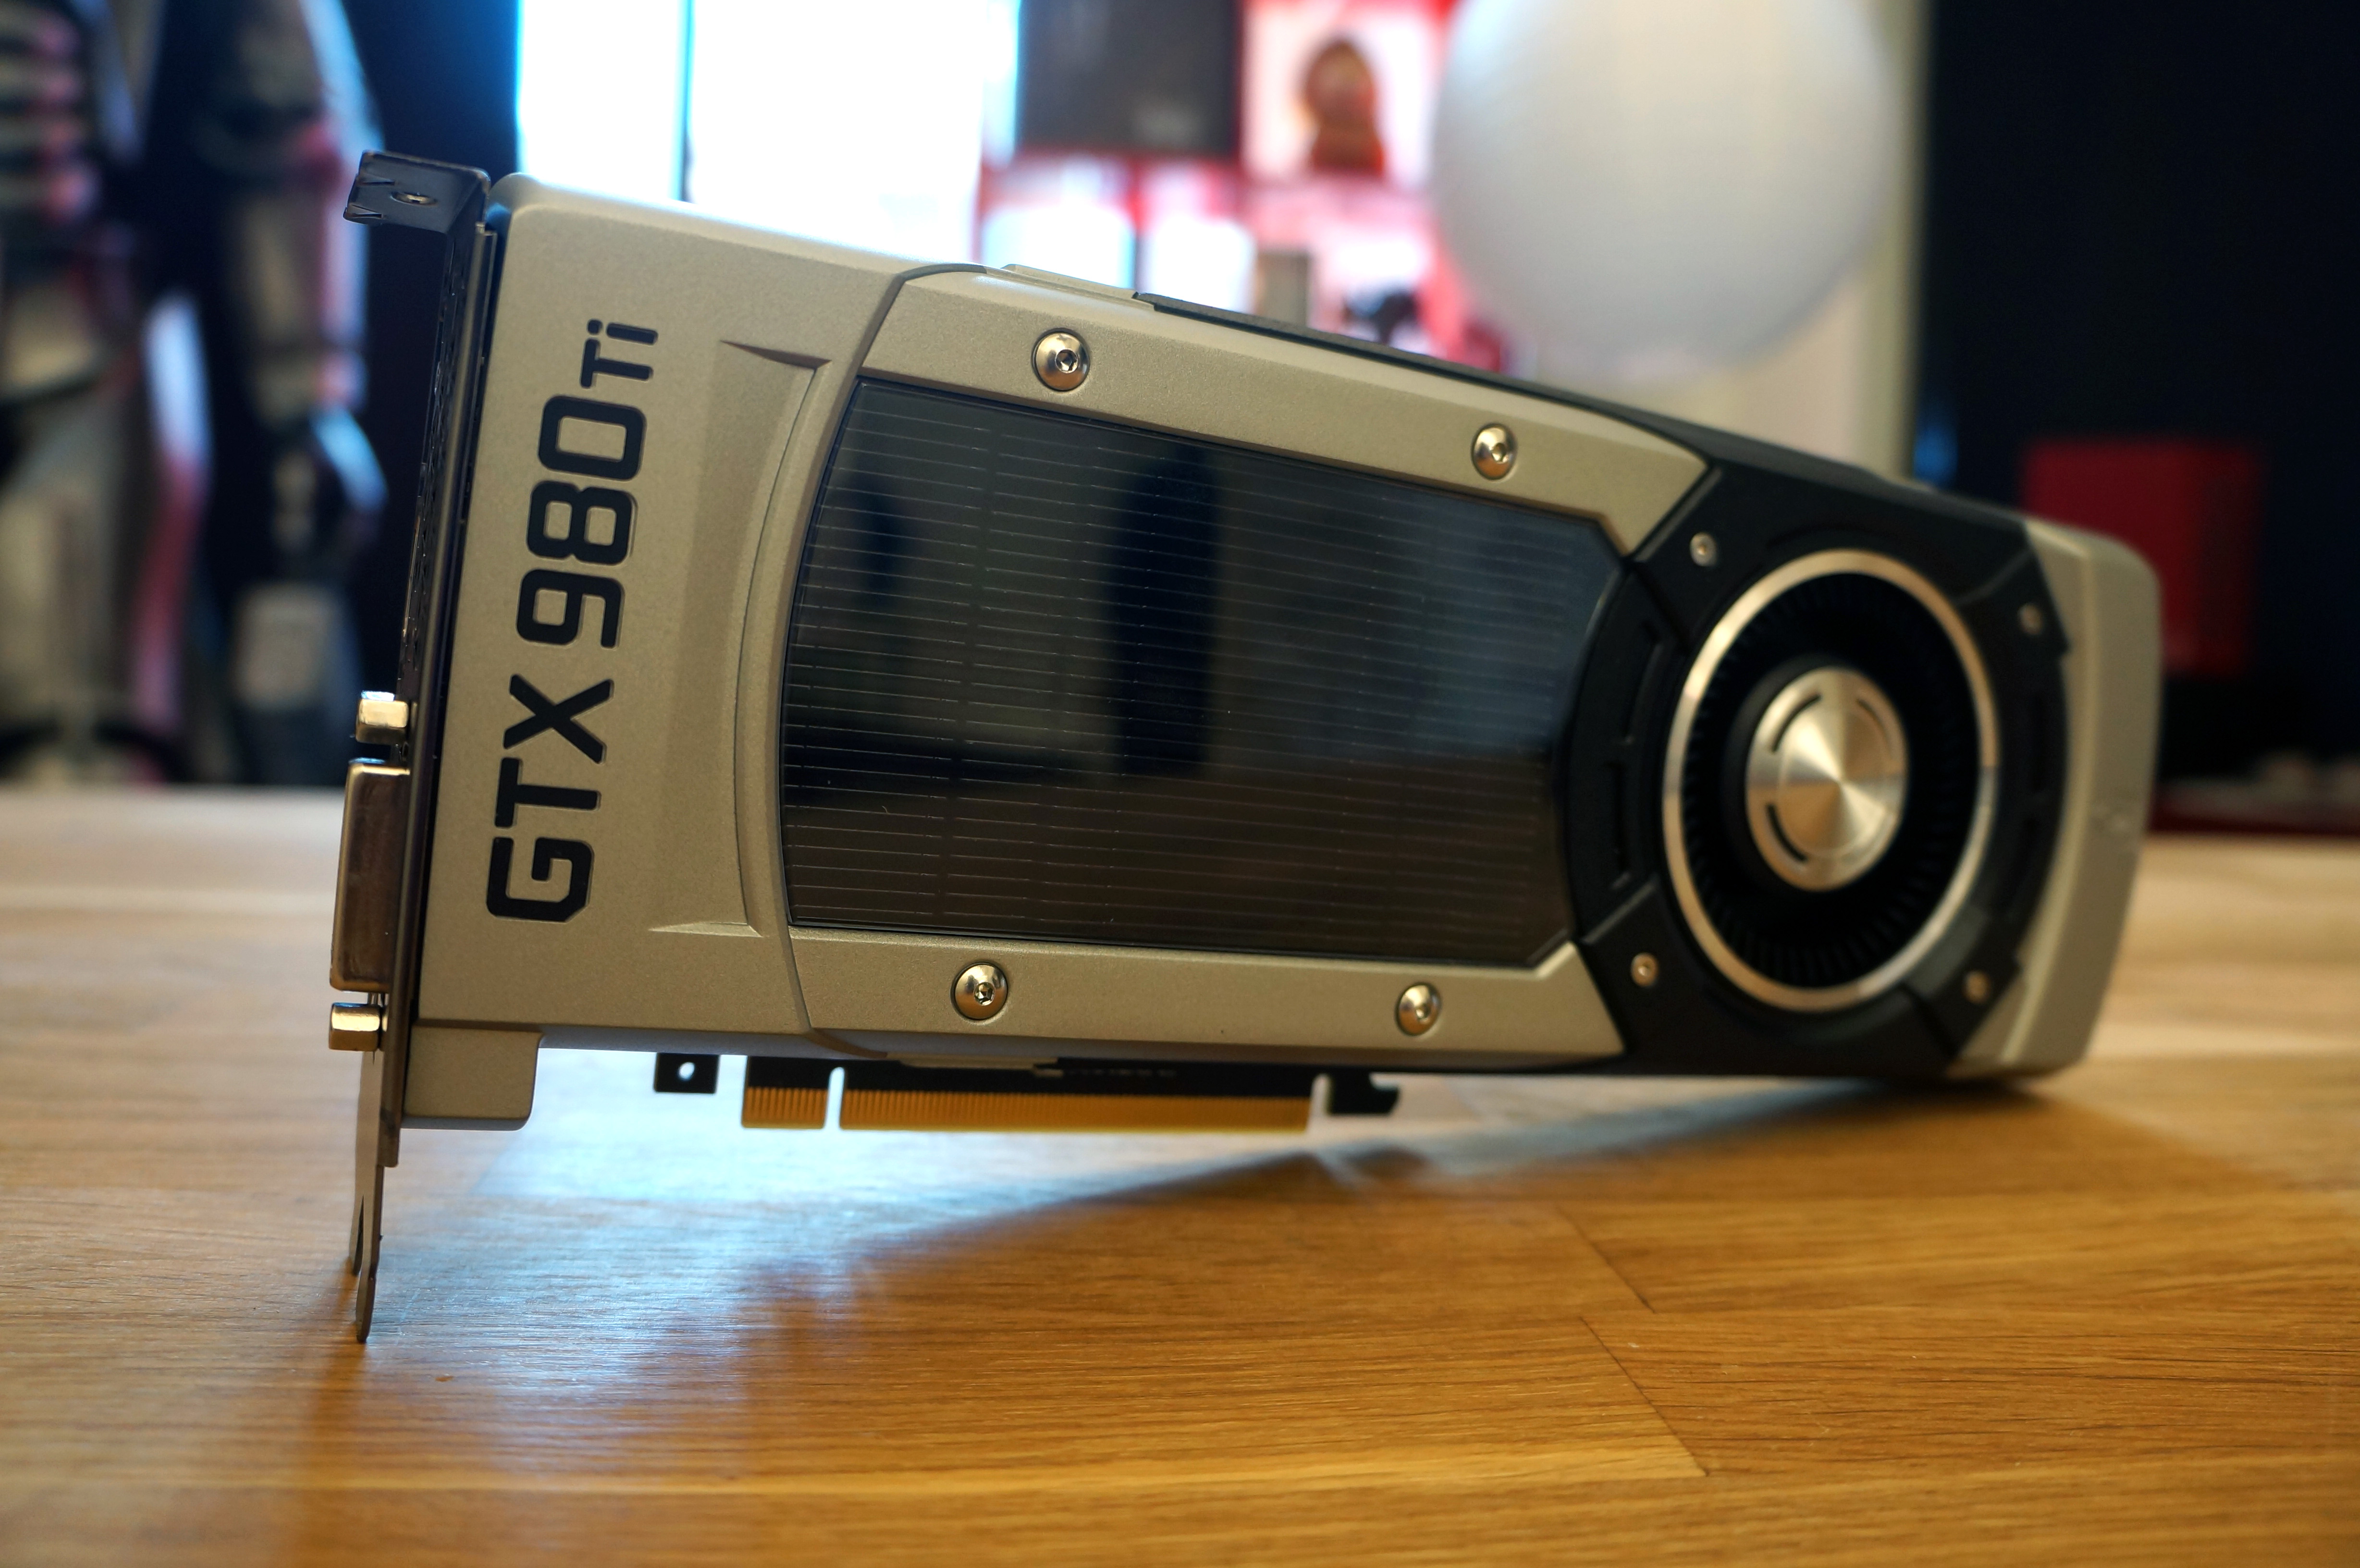 Nvidia GTX 980 Ti announced: costs $650 